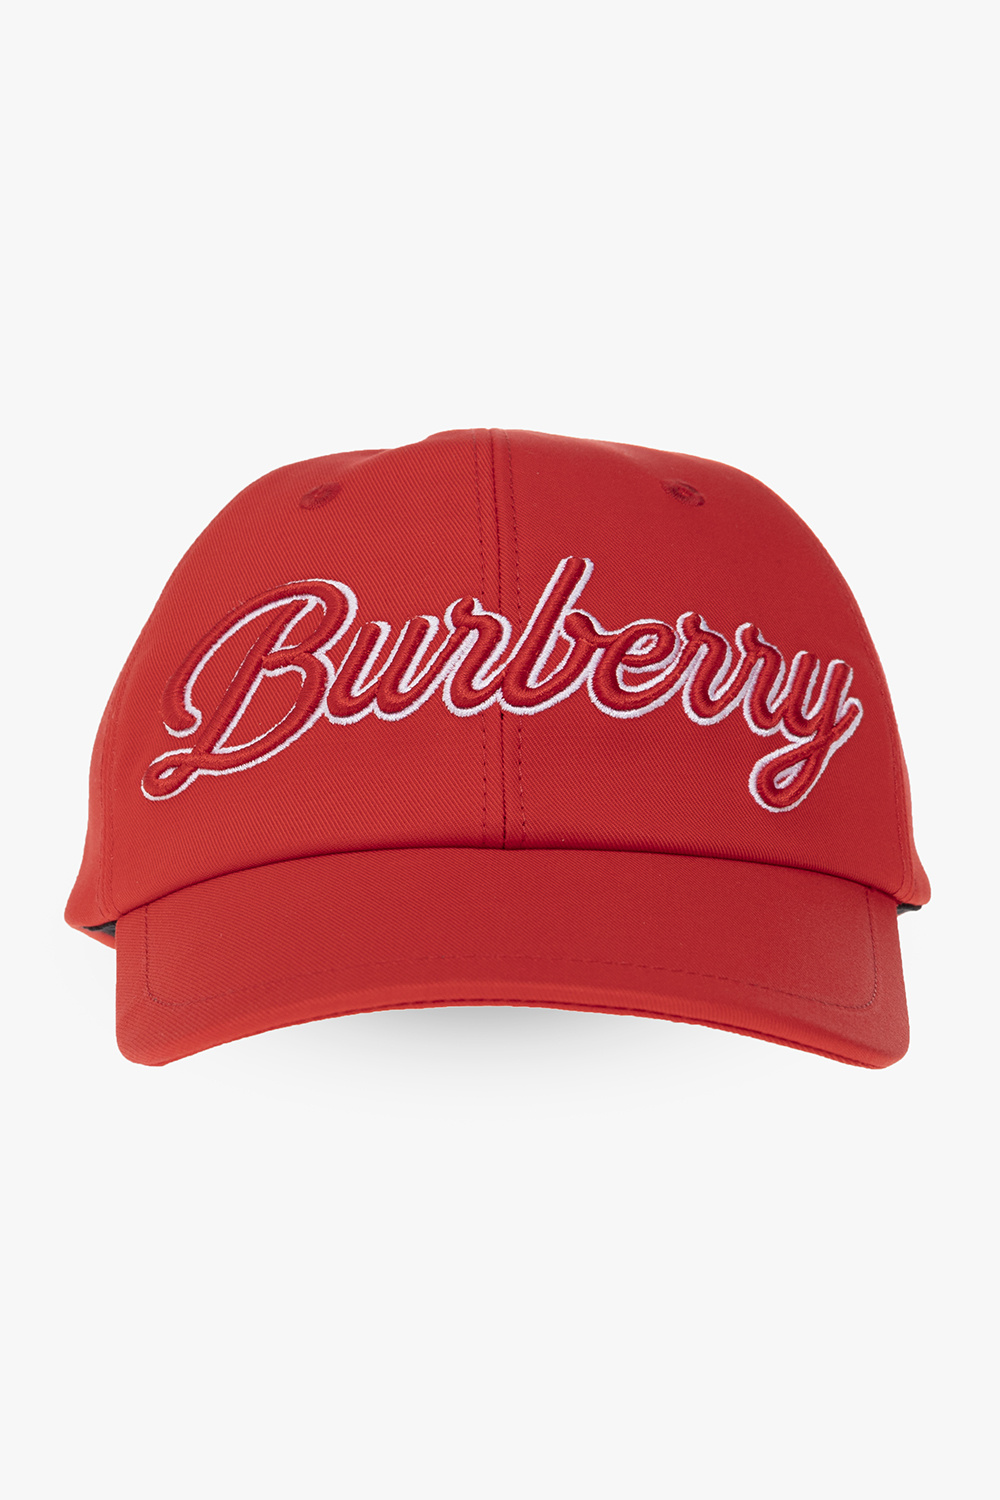 Burberry Kids Baseball cap